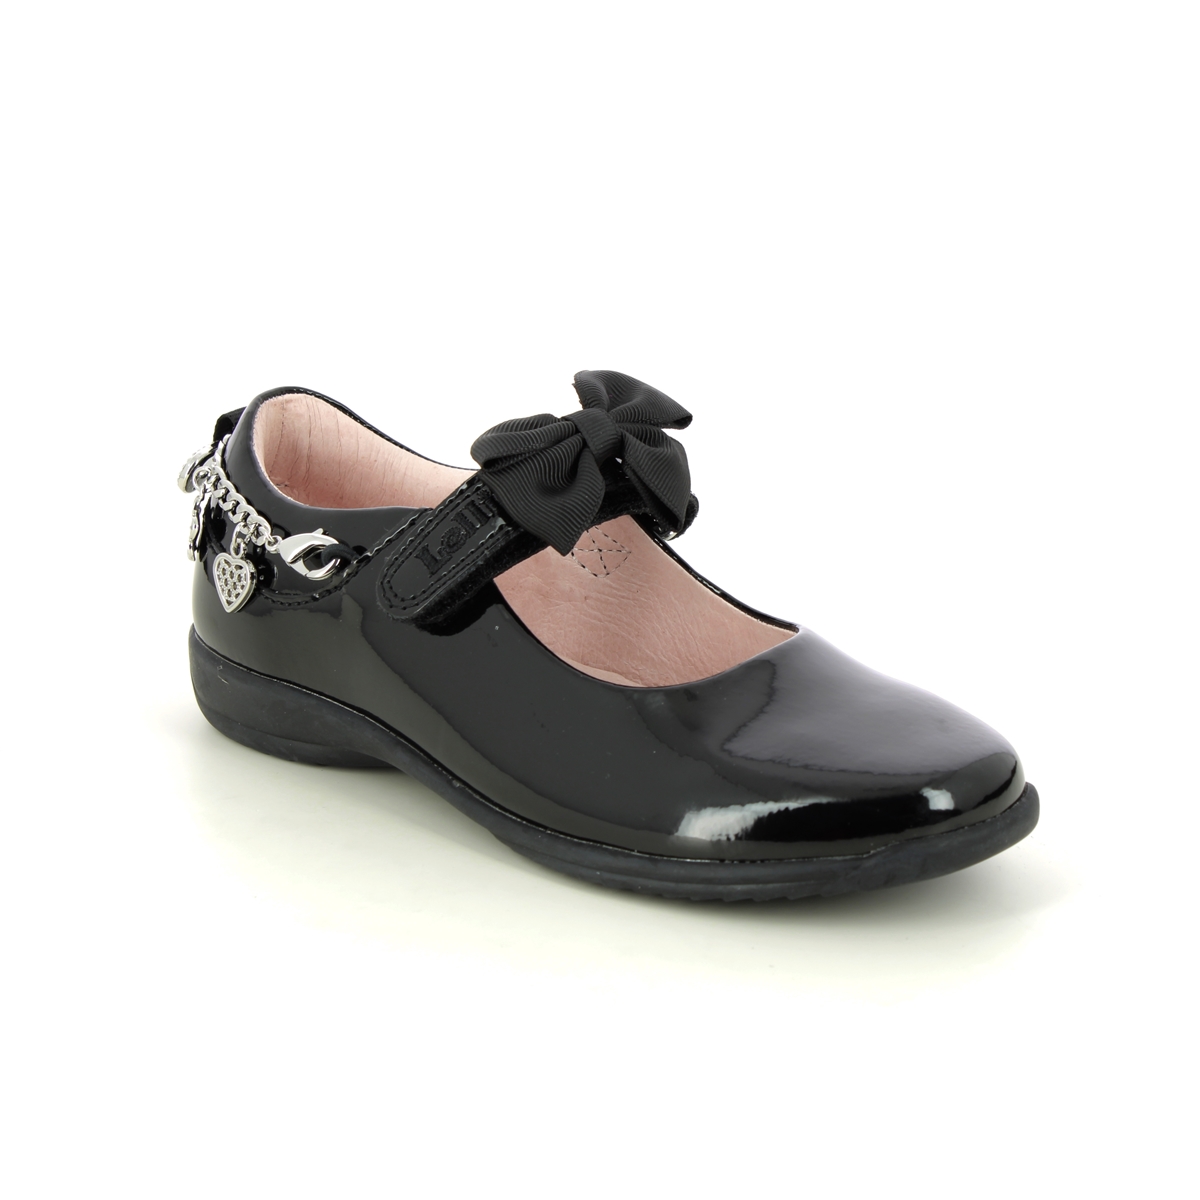 Lelli Kelly - Alicia Bracelet F In Black Patent Lk8219-Db01 In Size 29 In Plain Black Patent Girls Shoes  In Black Patent For School For kids